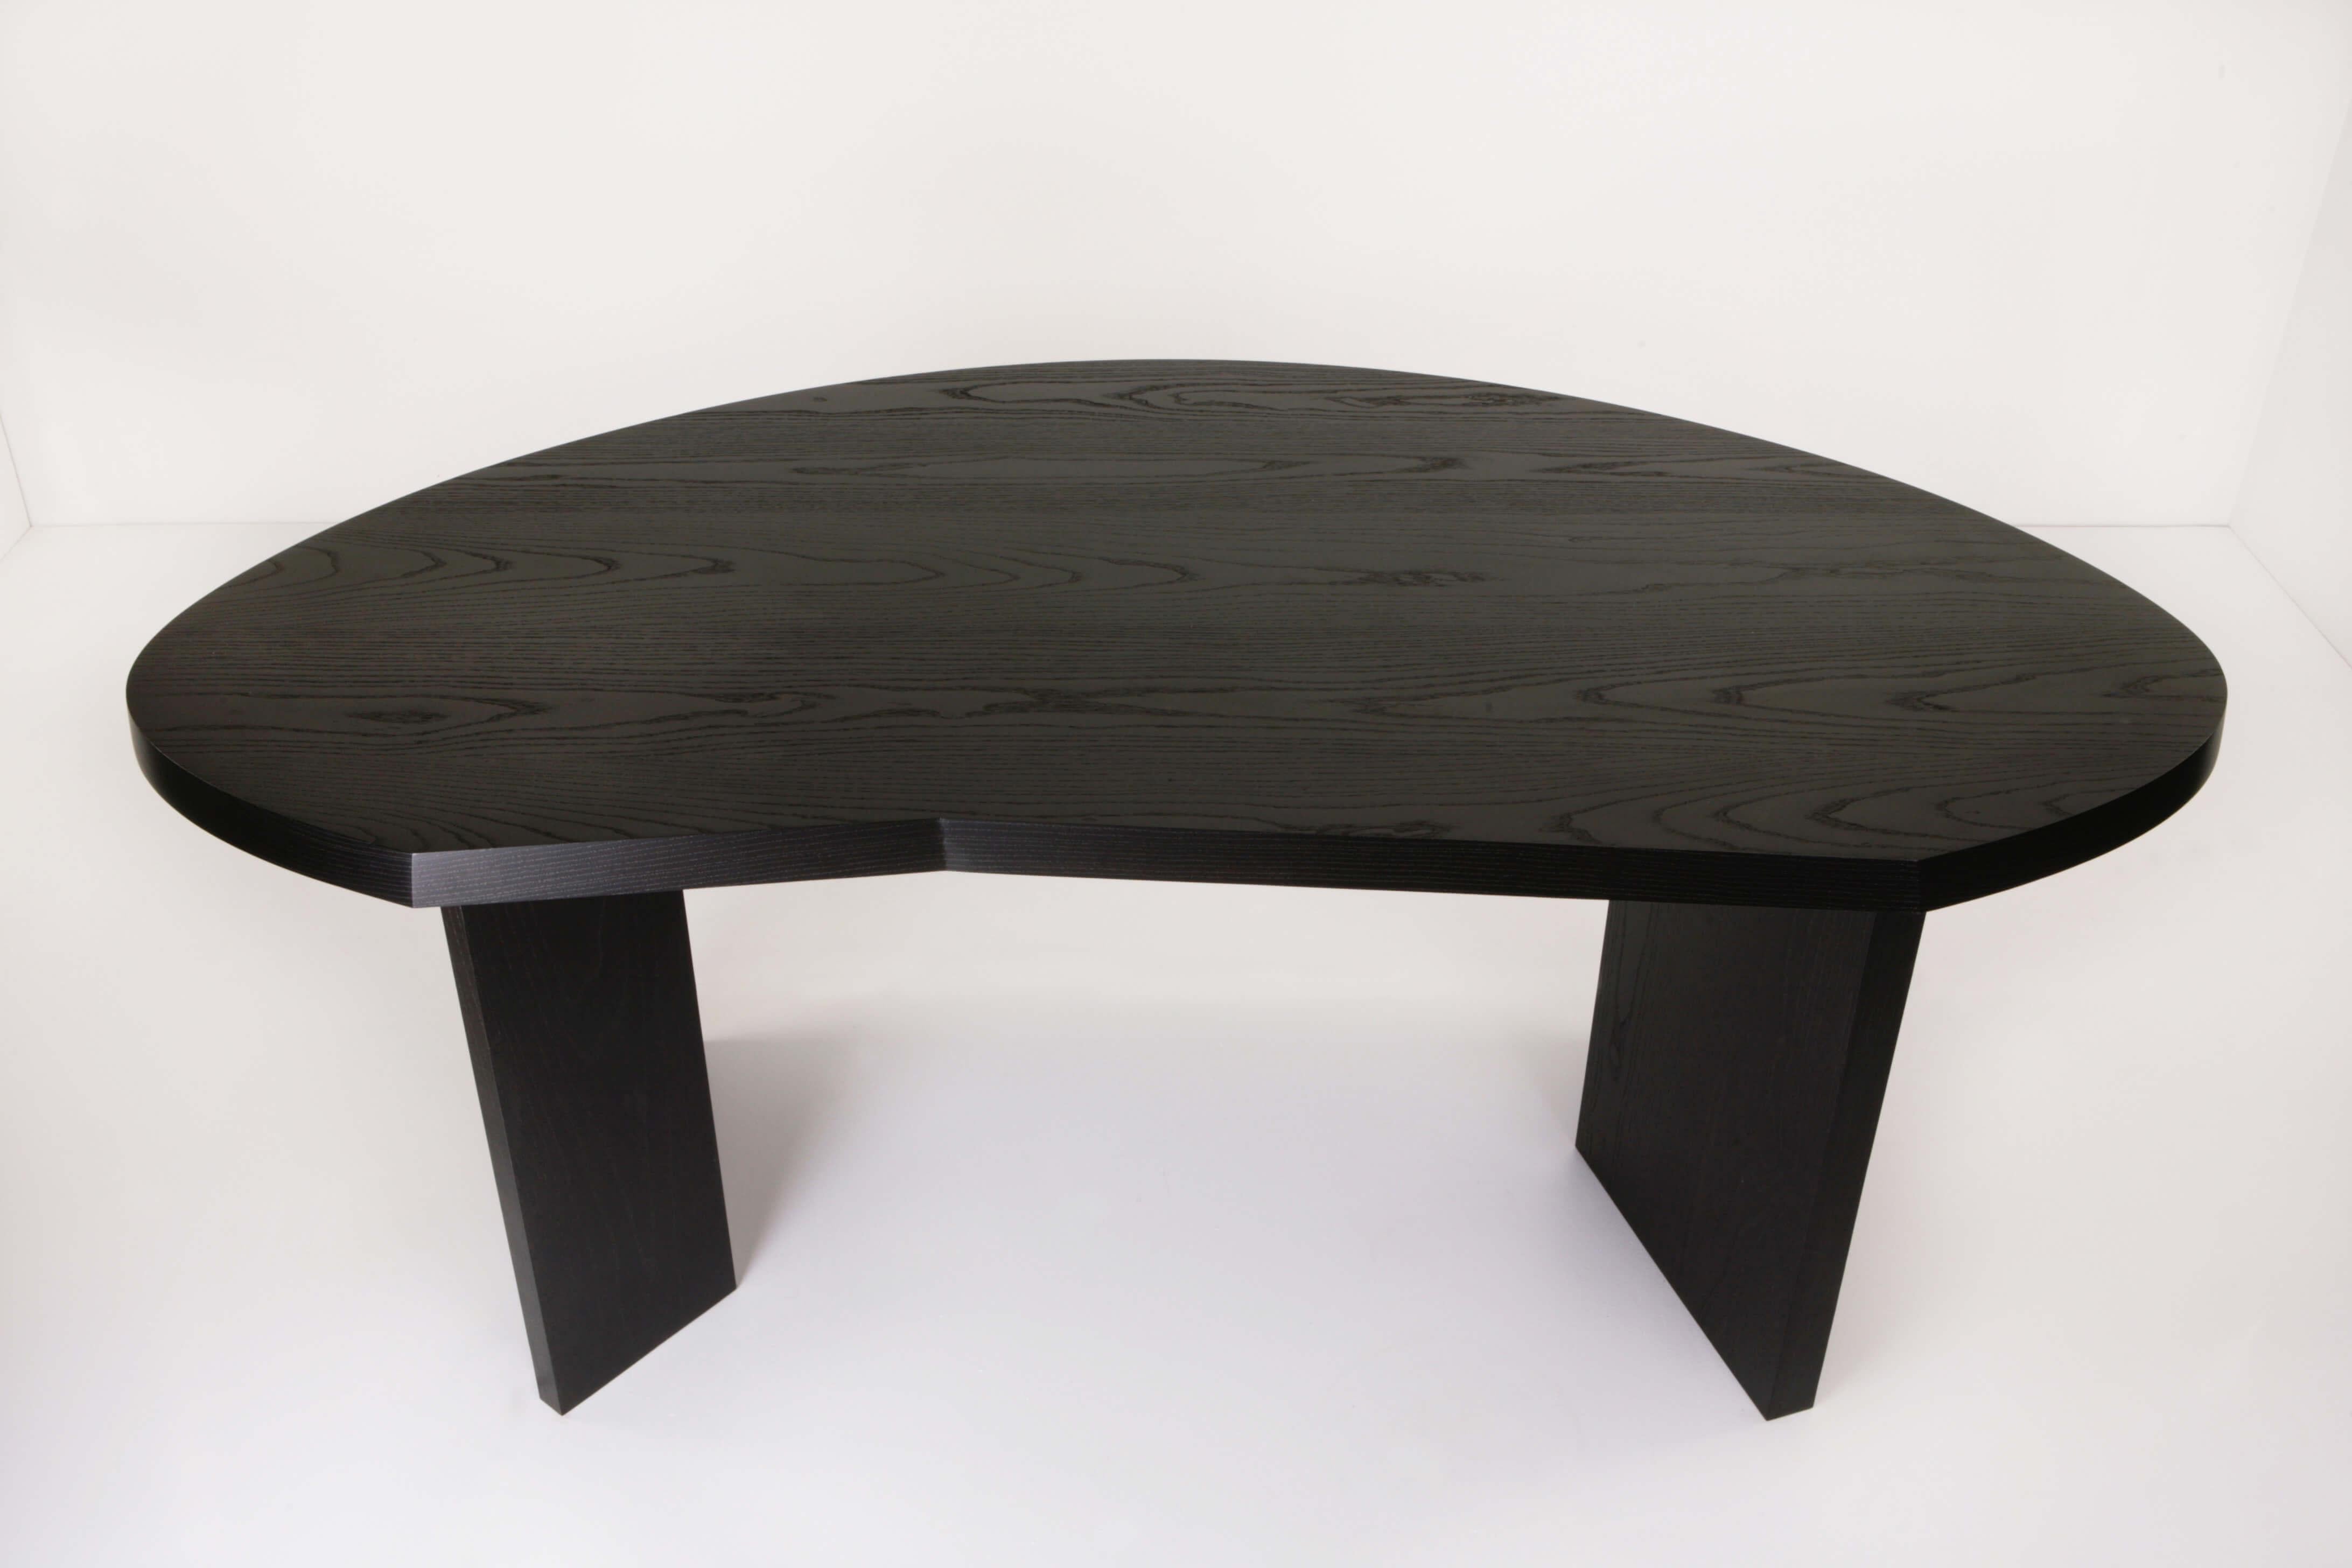 Minimalist Chene Table or Desk in Ebonized Ash by Atelier de Troupe, in Stock Now